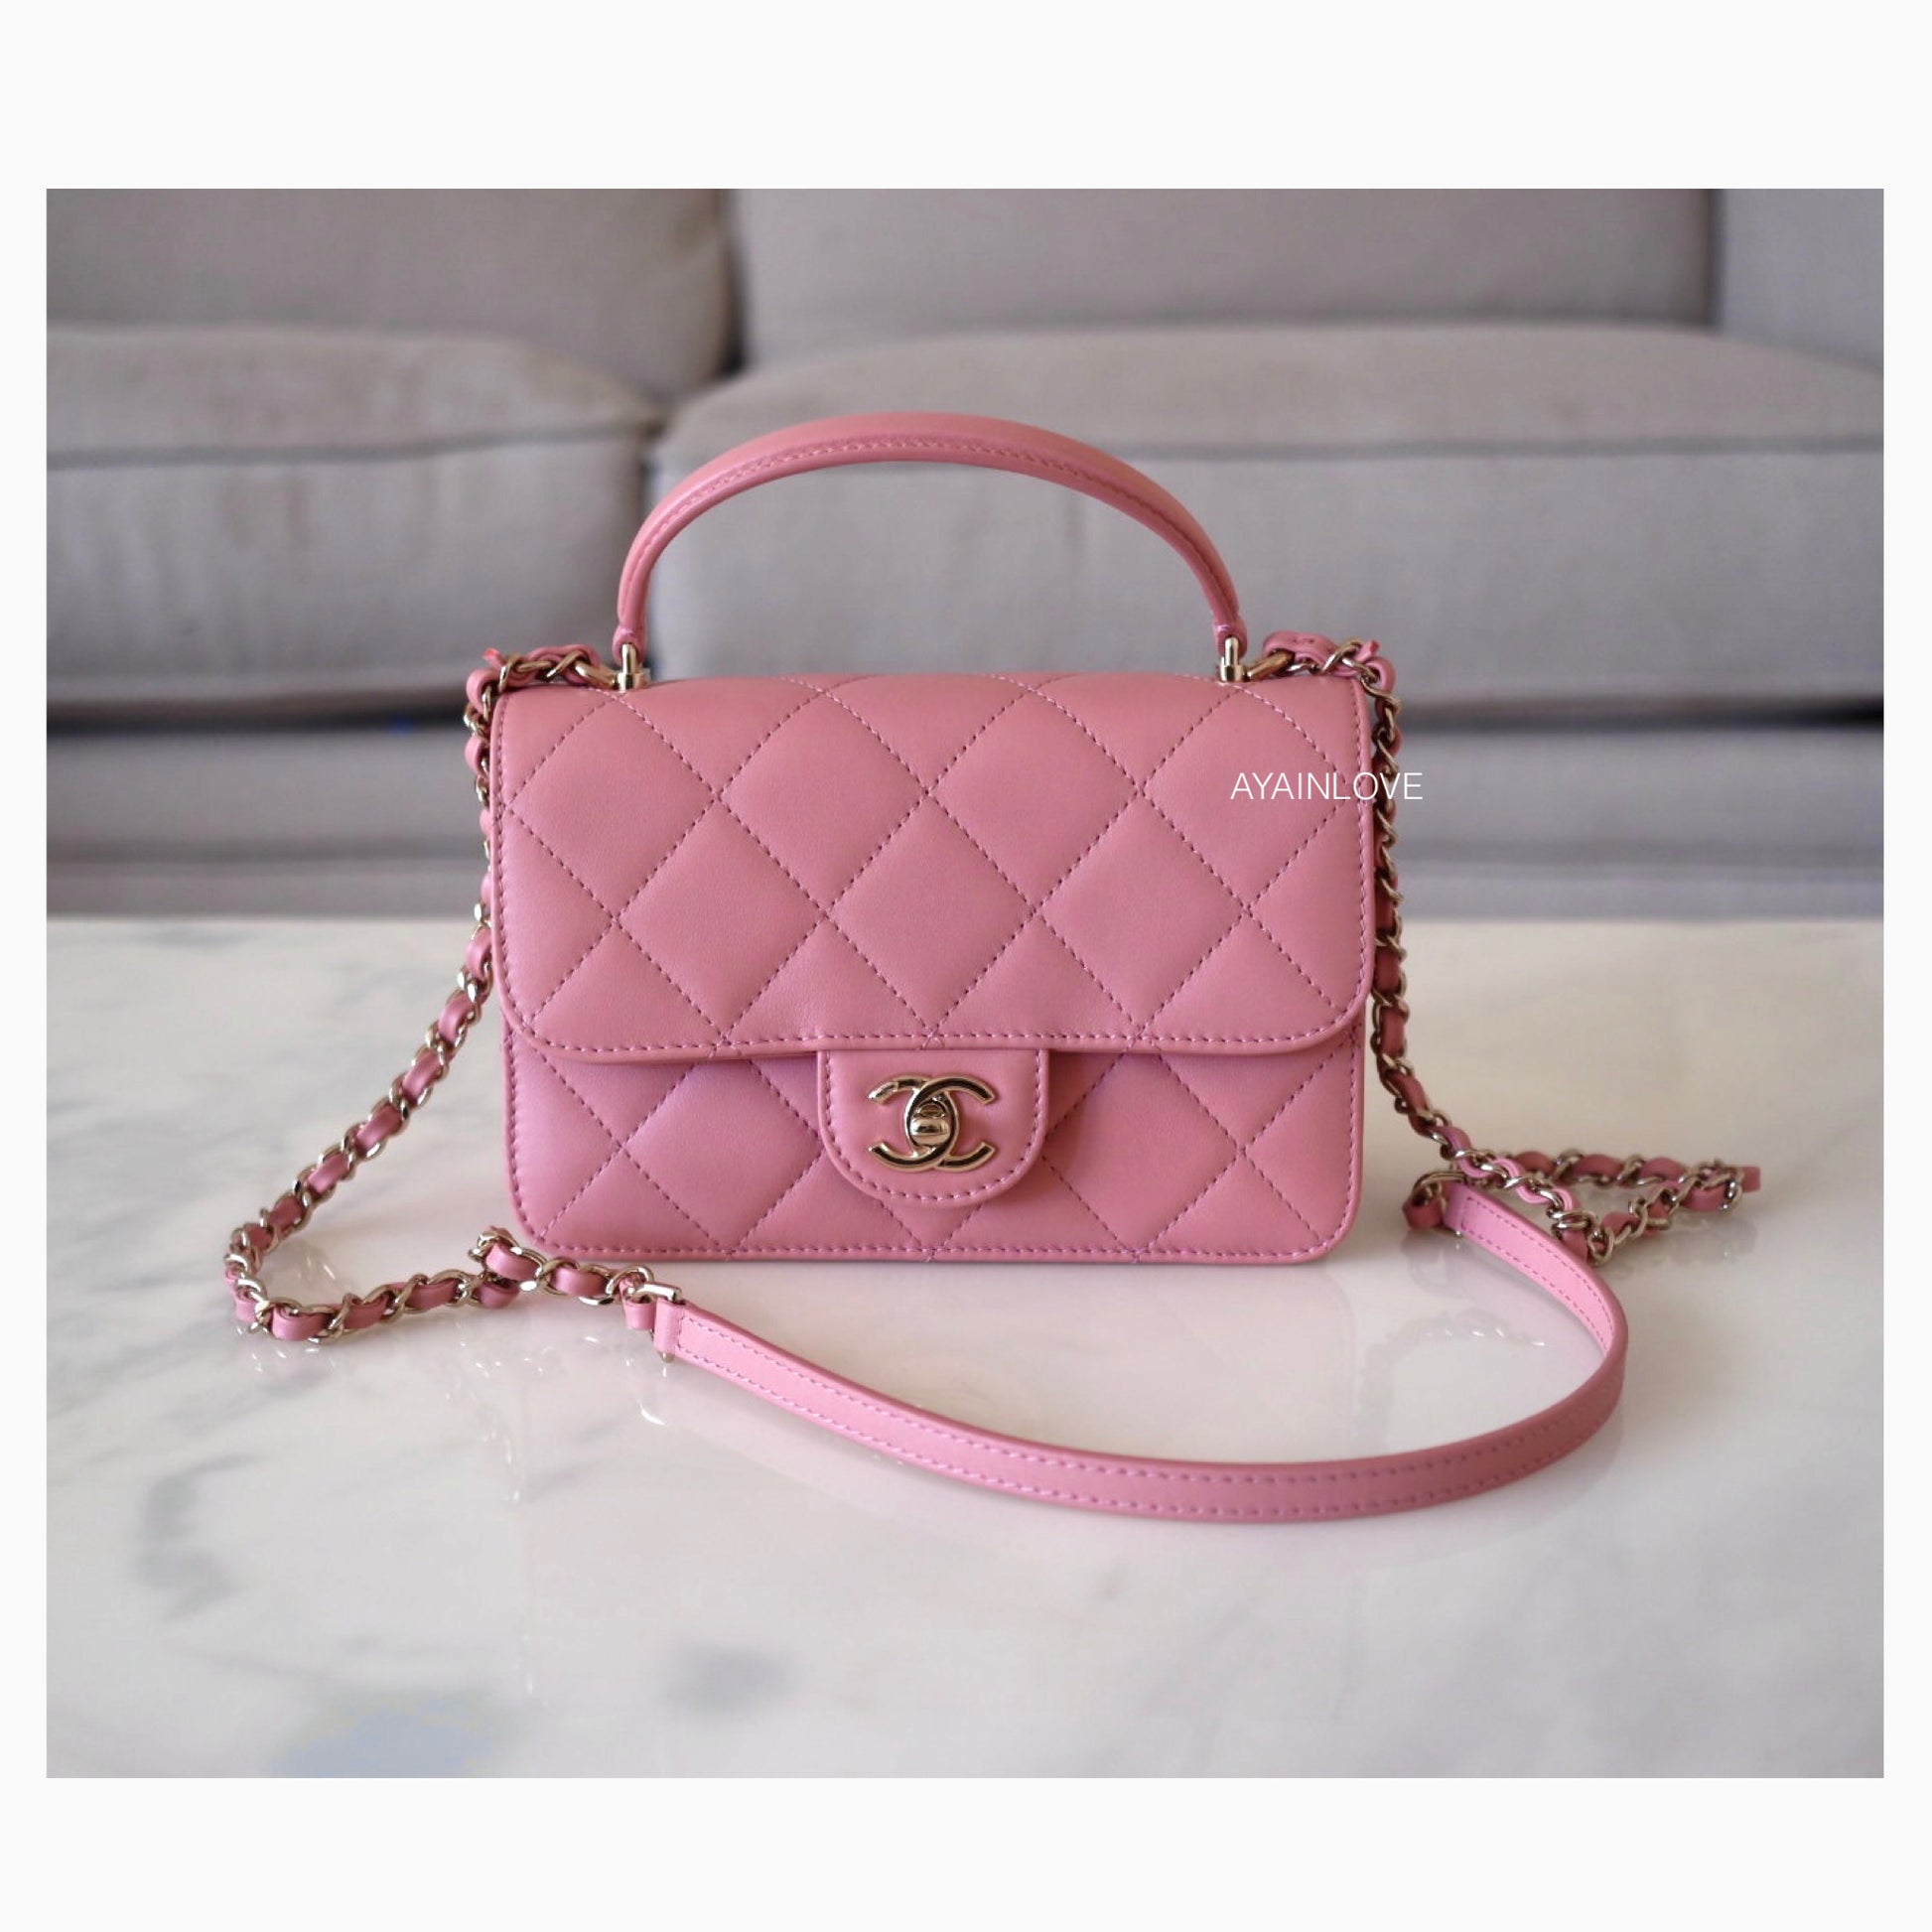 Coco handle Chanel bag in red 2019  Chanel clutch bag, Chanel bag, Chanel  handbags pink